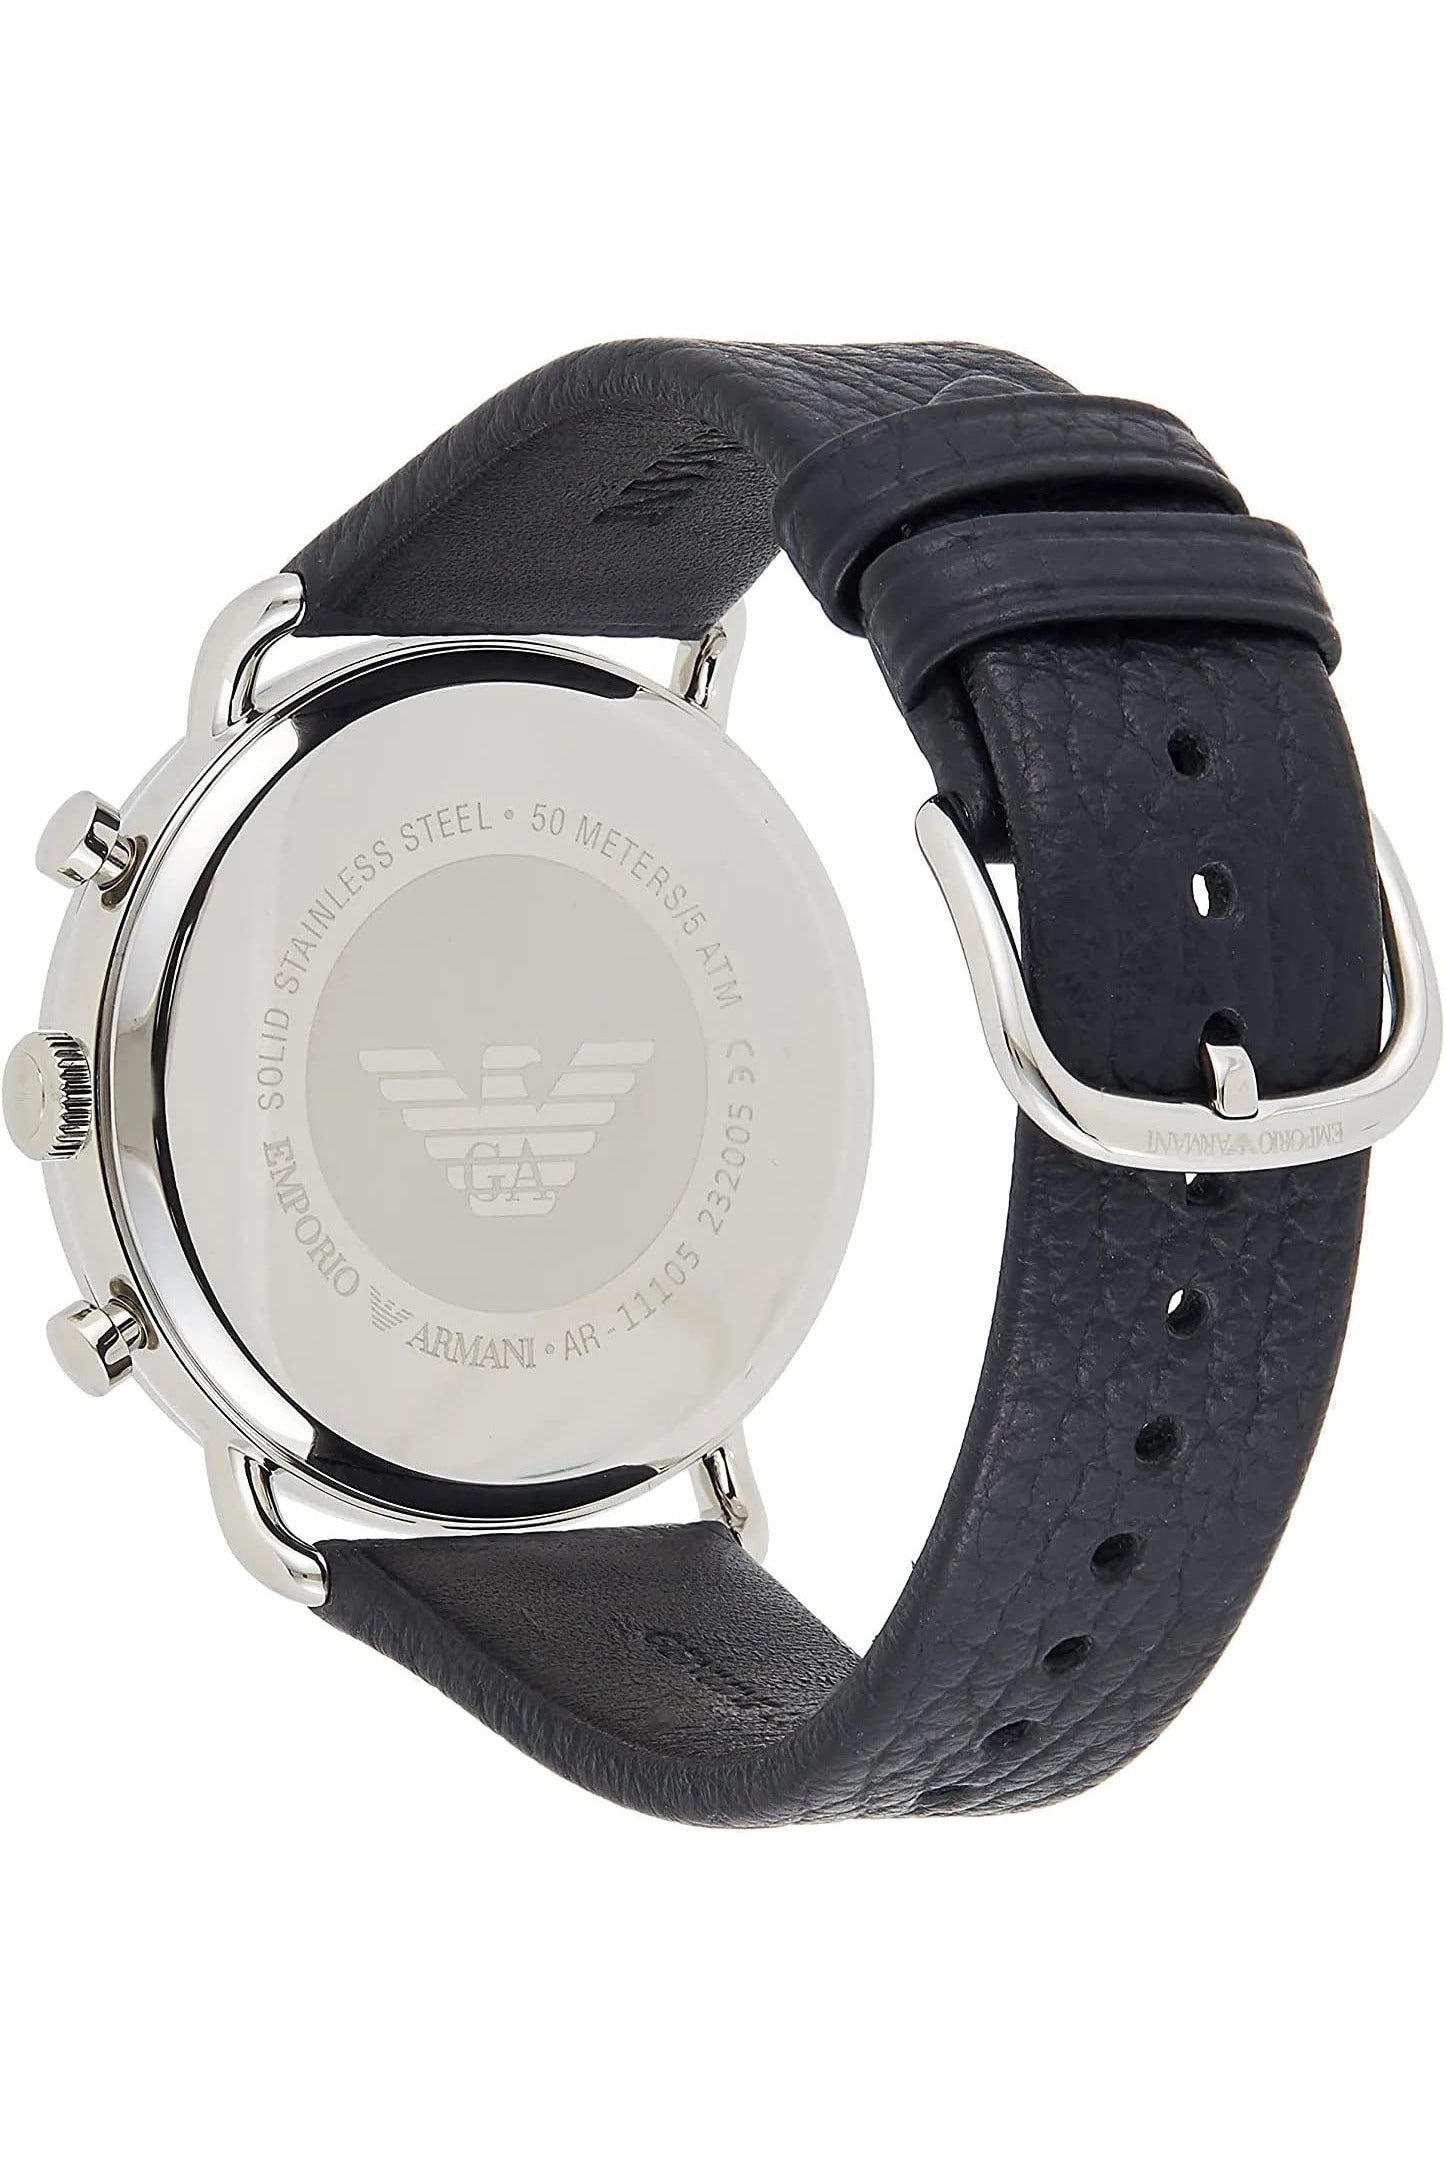 Buy Emporio Armani Men's Chronograph Quartz Leather Strap Blue Dial 43mm Watch AR11105 in Pakistan